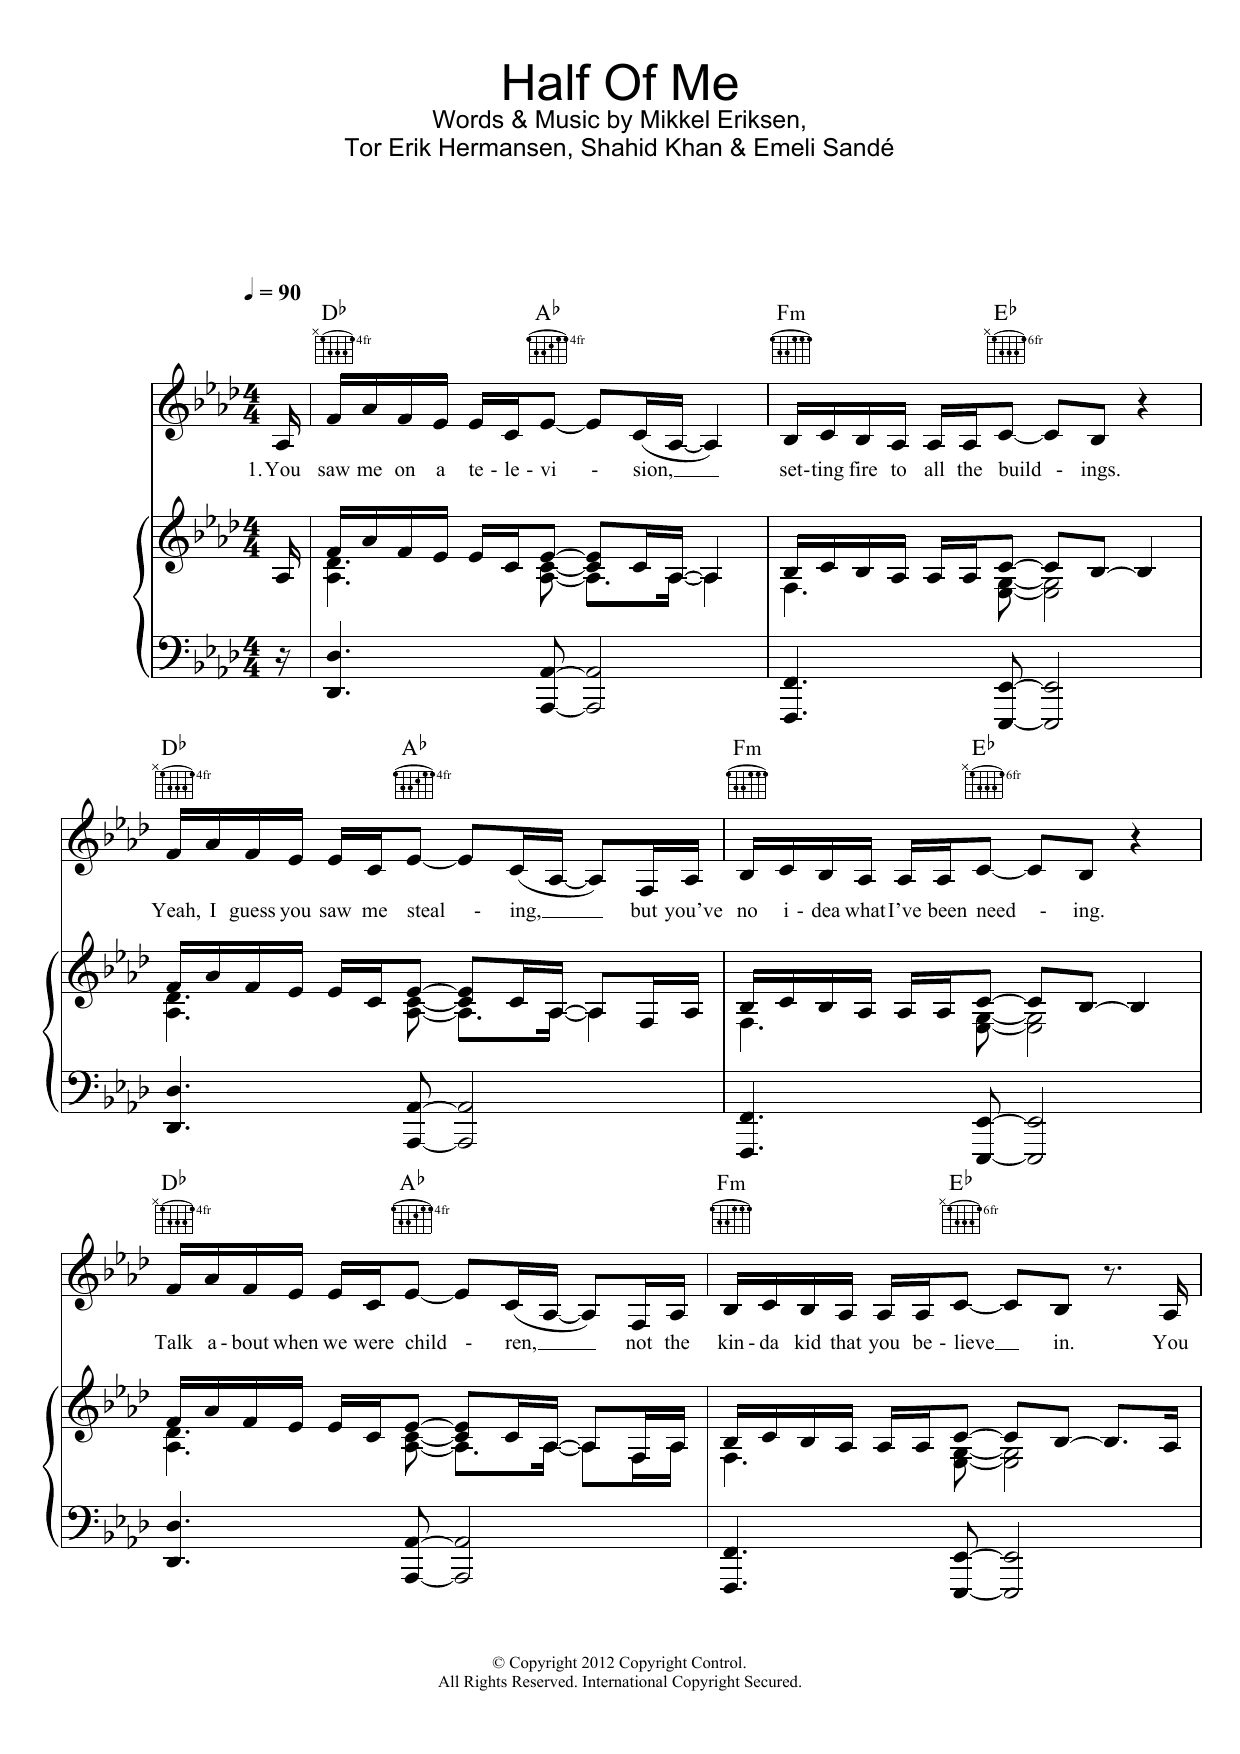 Rihanna Half Of Me sheet music notes printable PDF score